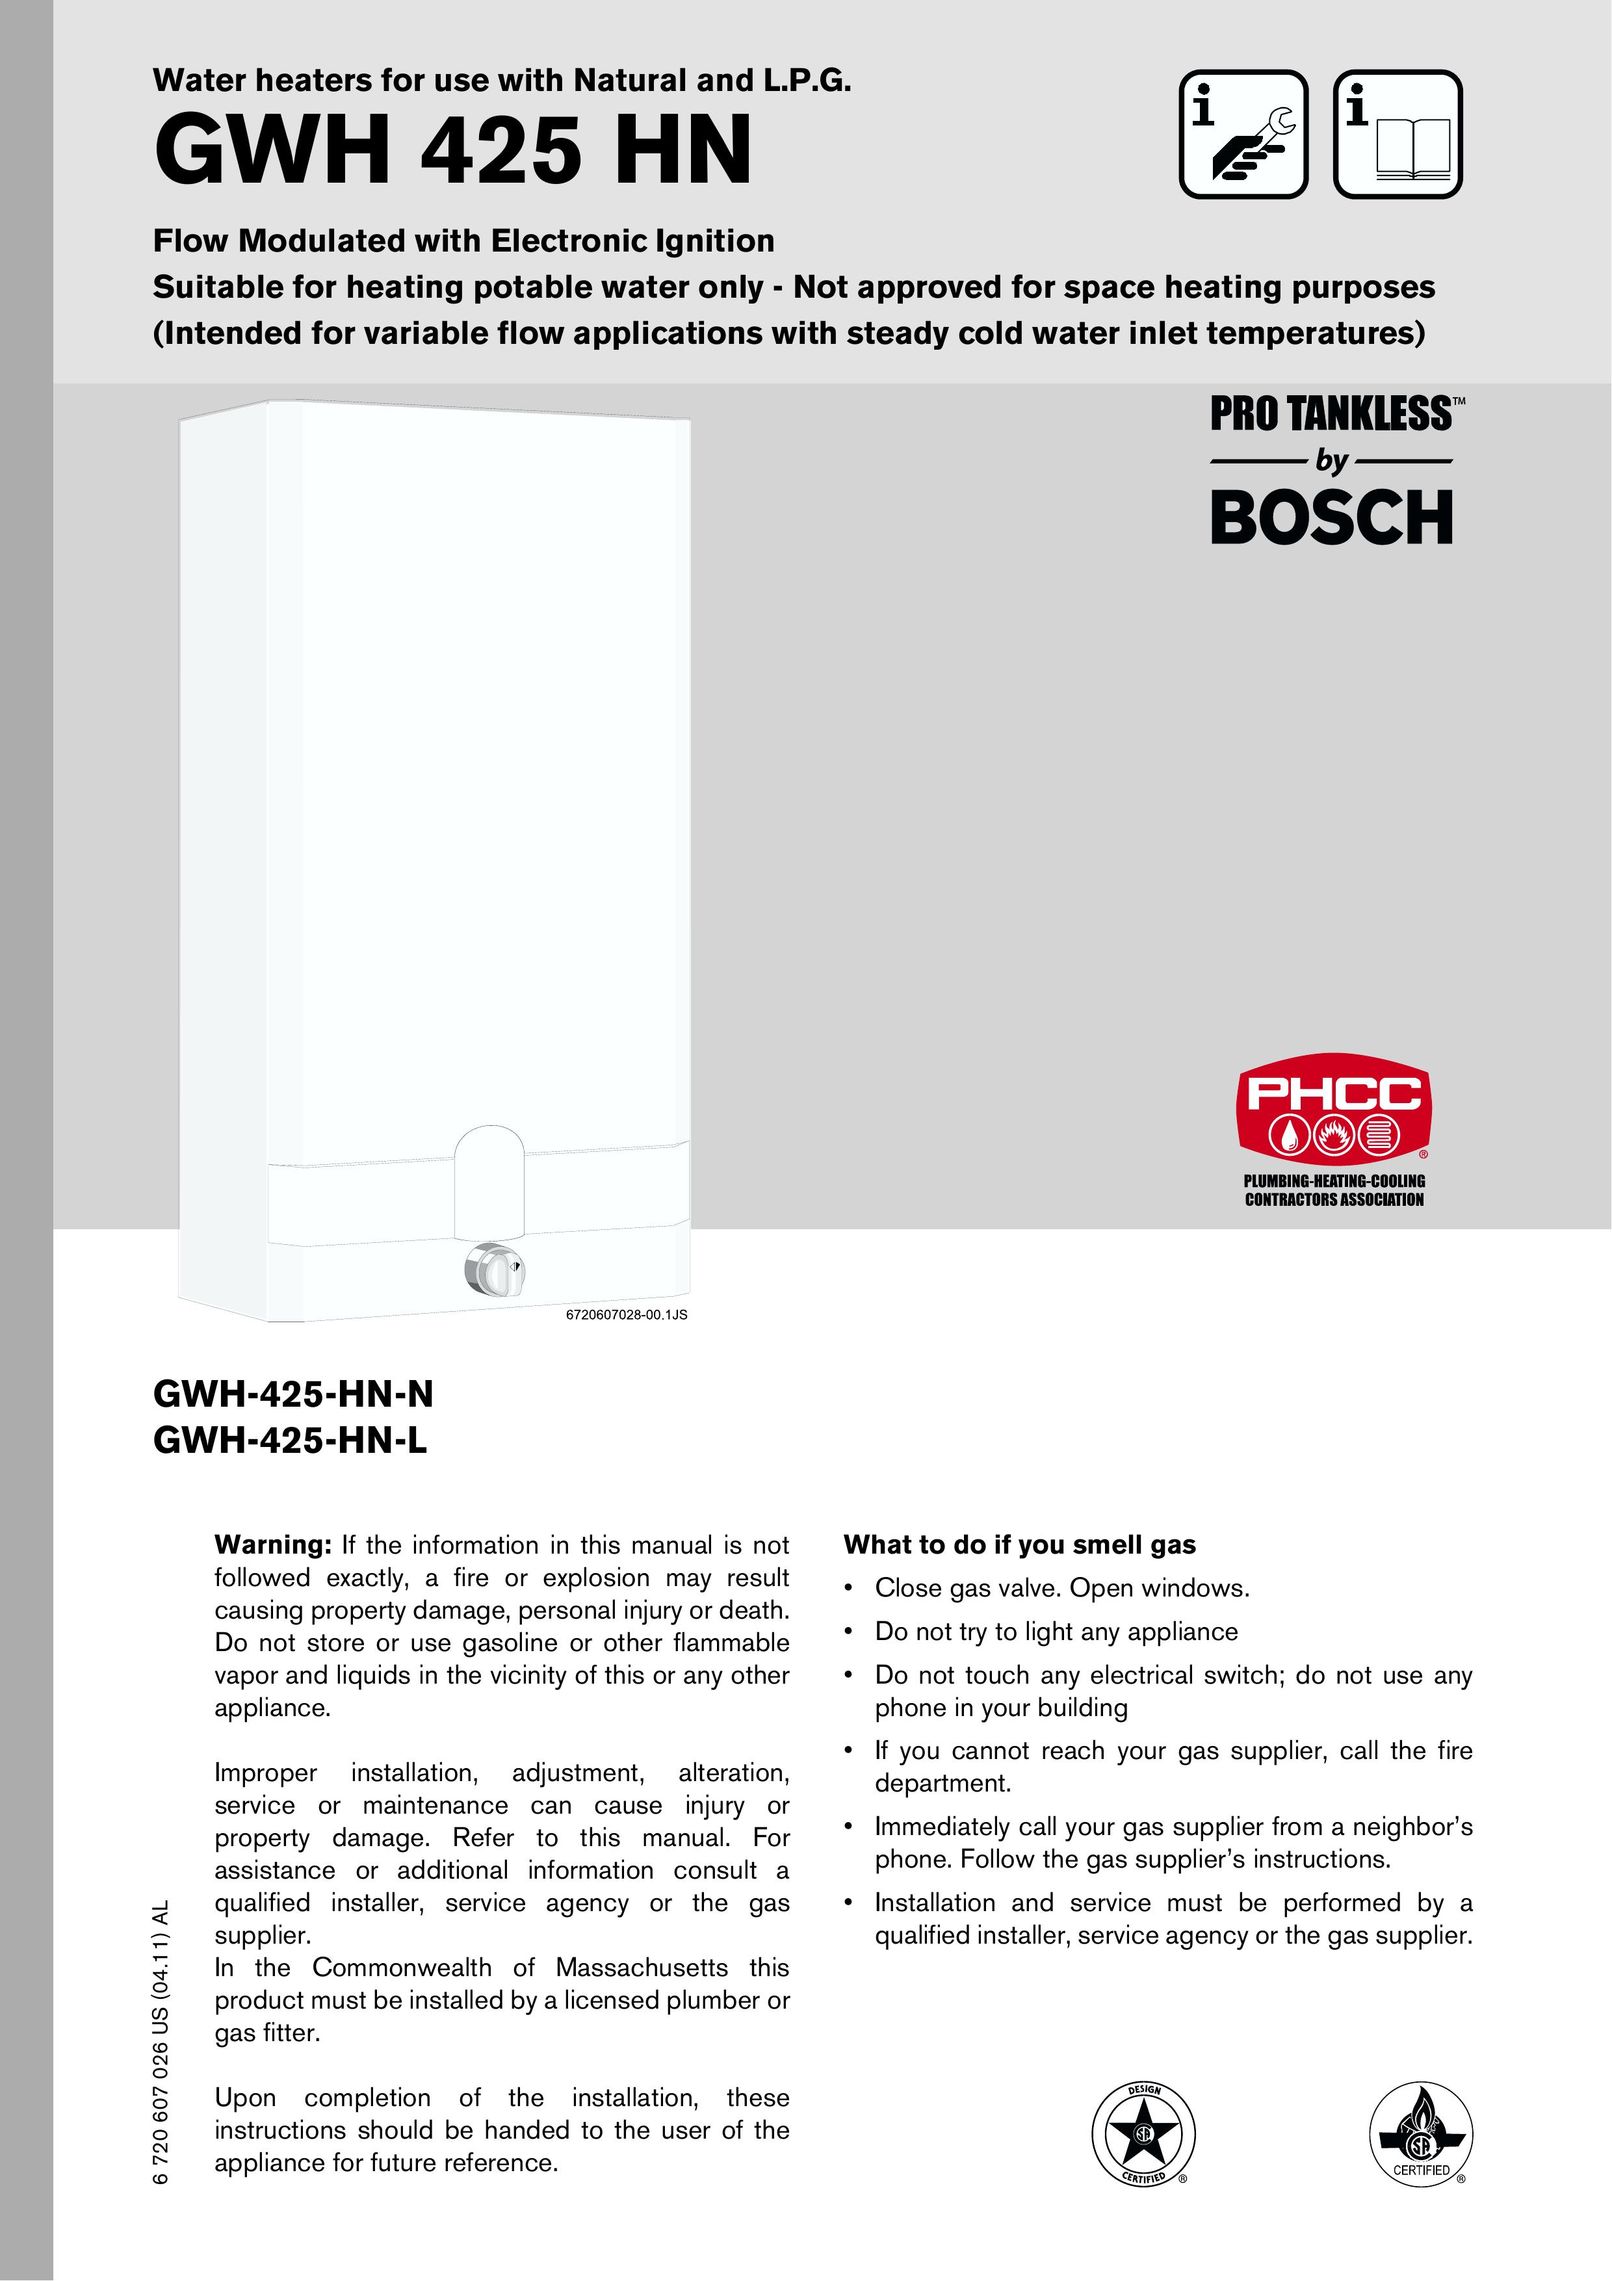 Bosch Appliances GWH-425-HN-L Water Heater User Manual